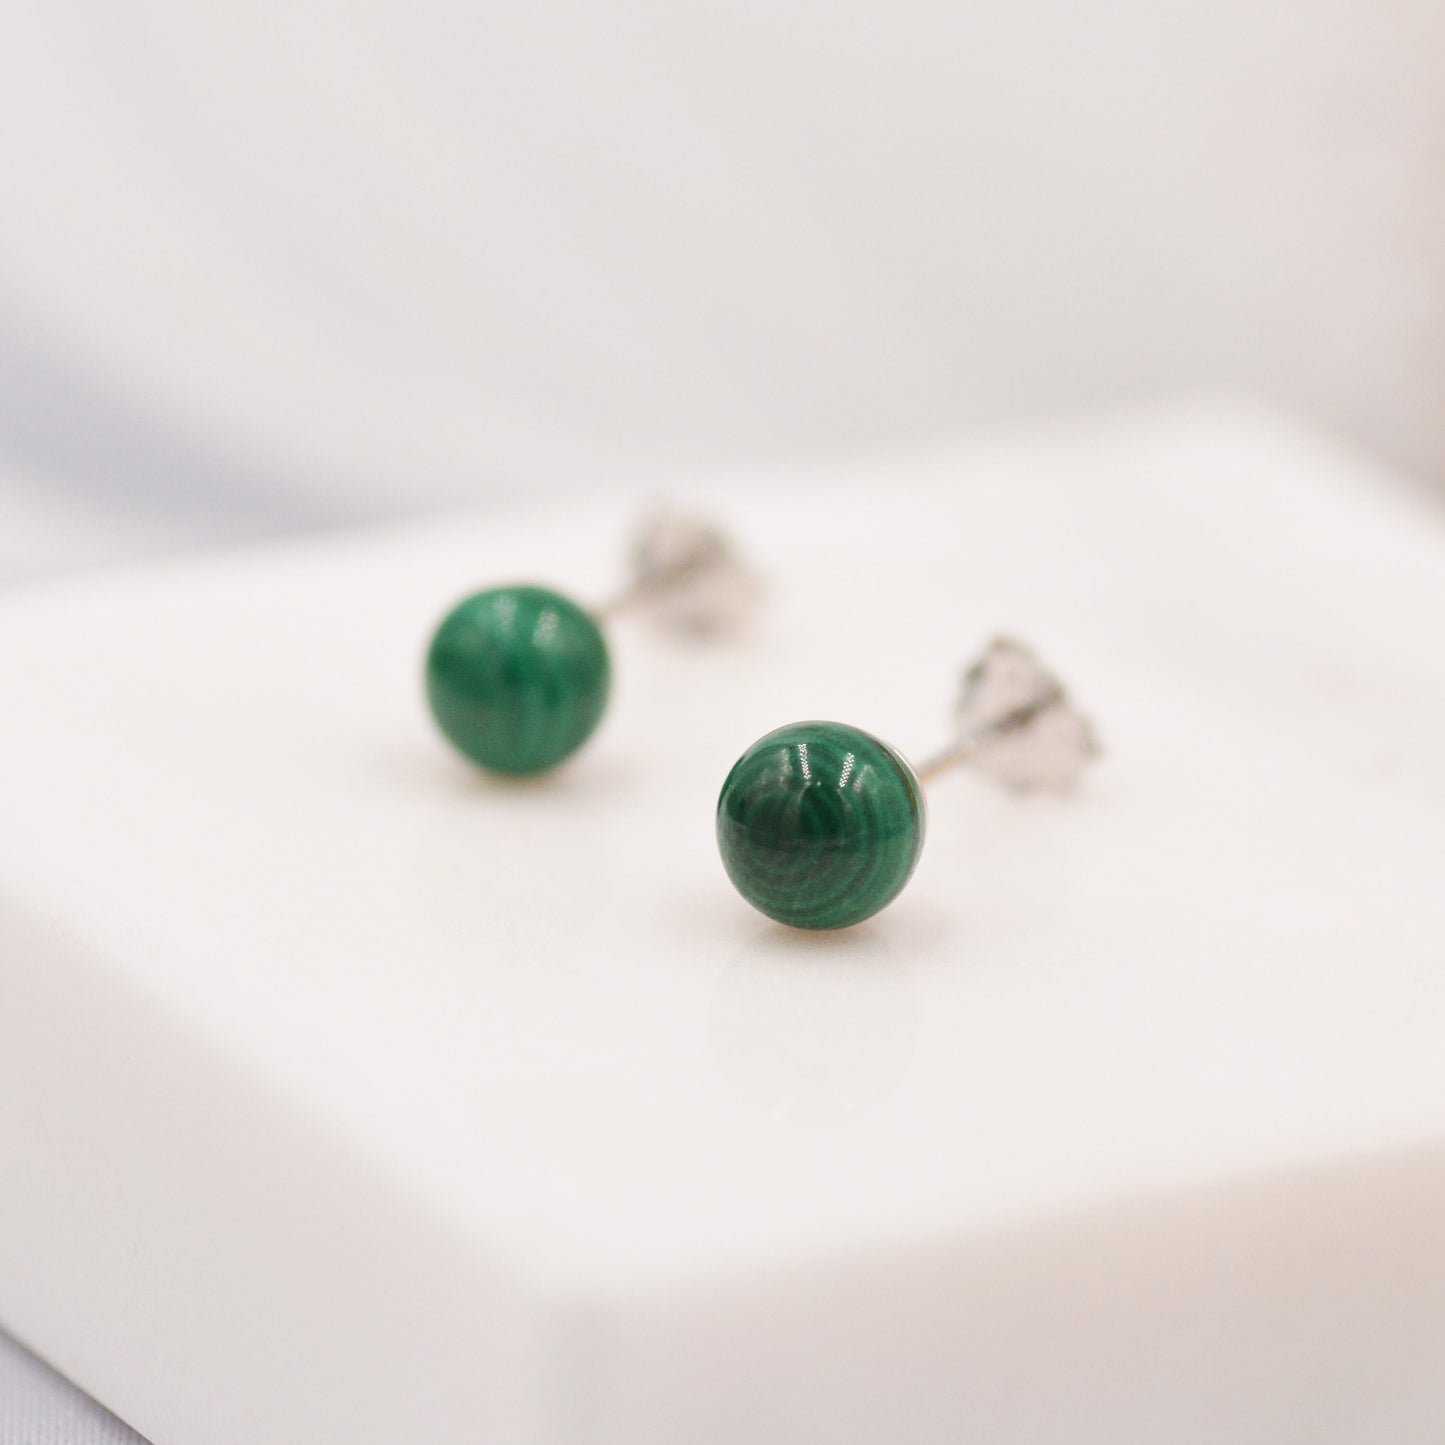 6mm Malachite Stud Earrings in Sterling Silver, Semi-Precious Gemstone Stud Earrings, Genuine Malachite Earrings, Green Gemstone